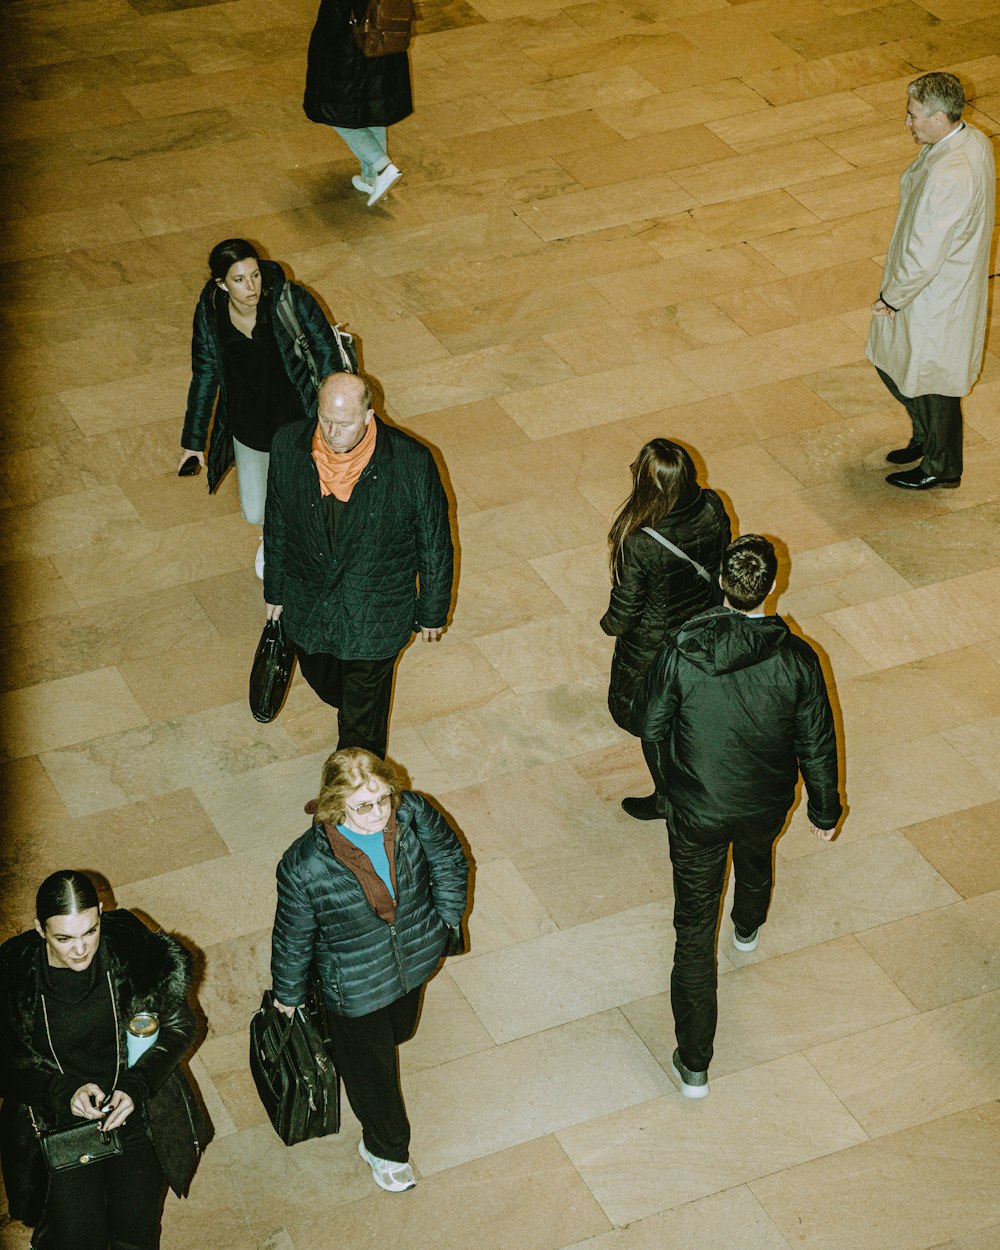 group of people standing on brown wooden floor